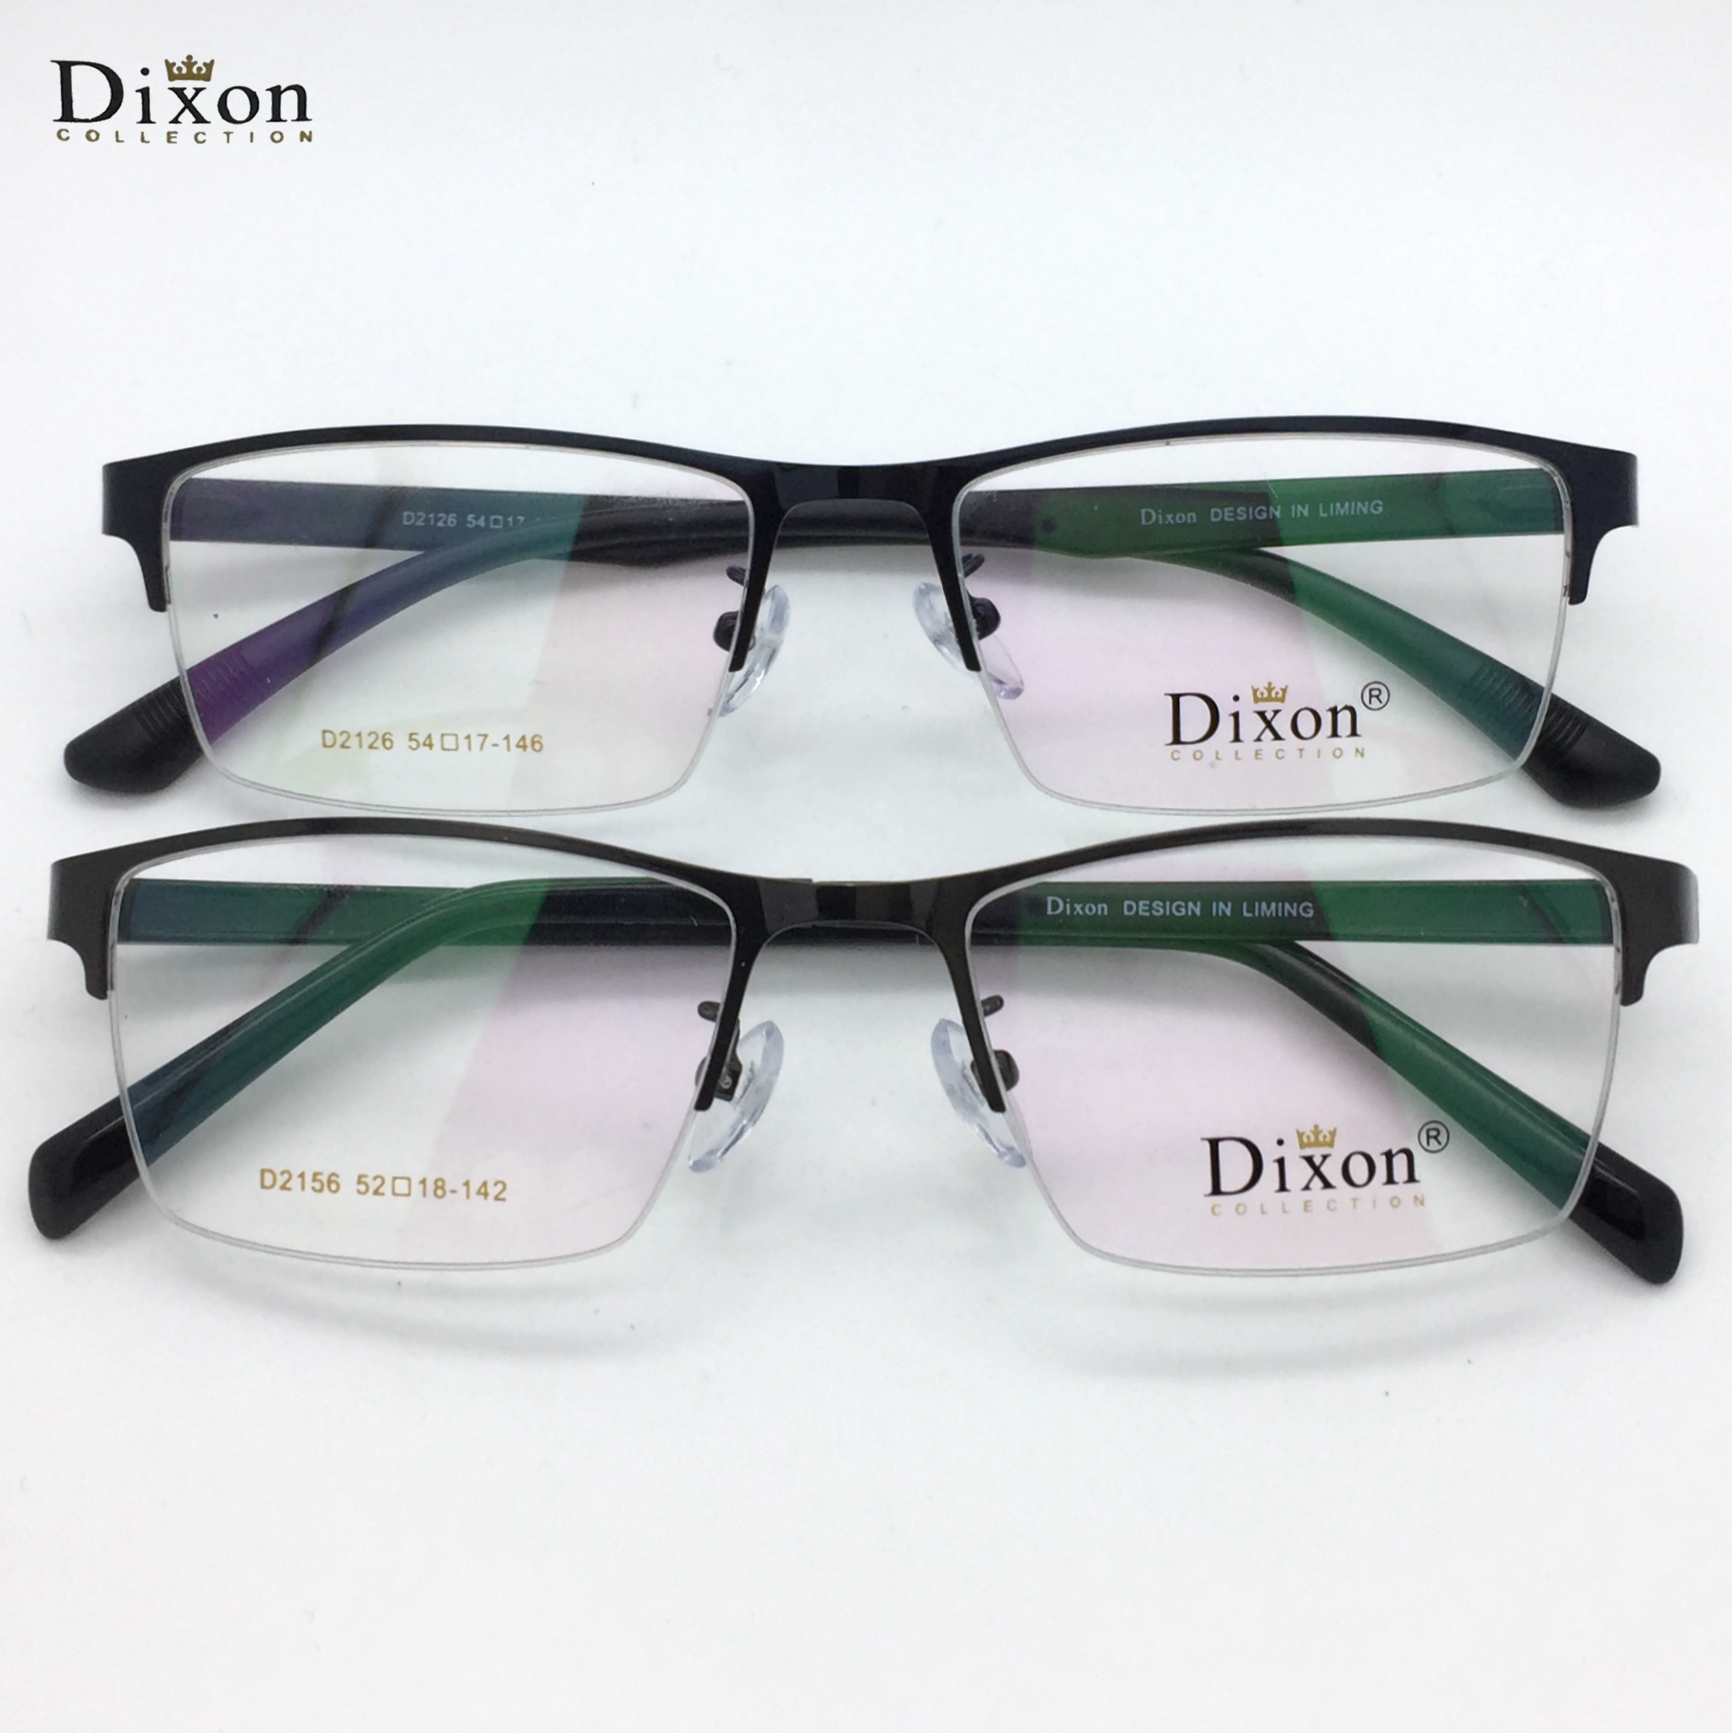 Dixon迪克逊小方框眼镜商务男半框眼镜架配近视防蓝光D2126/D2156